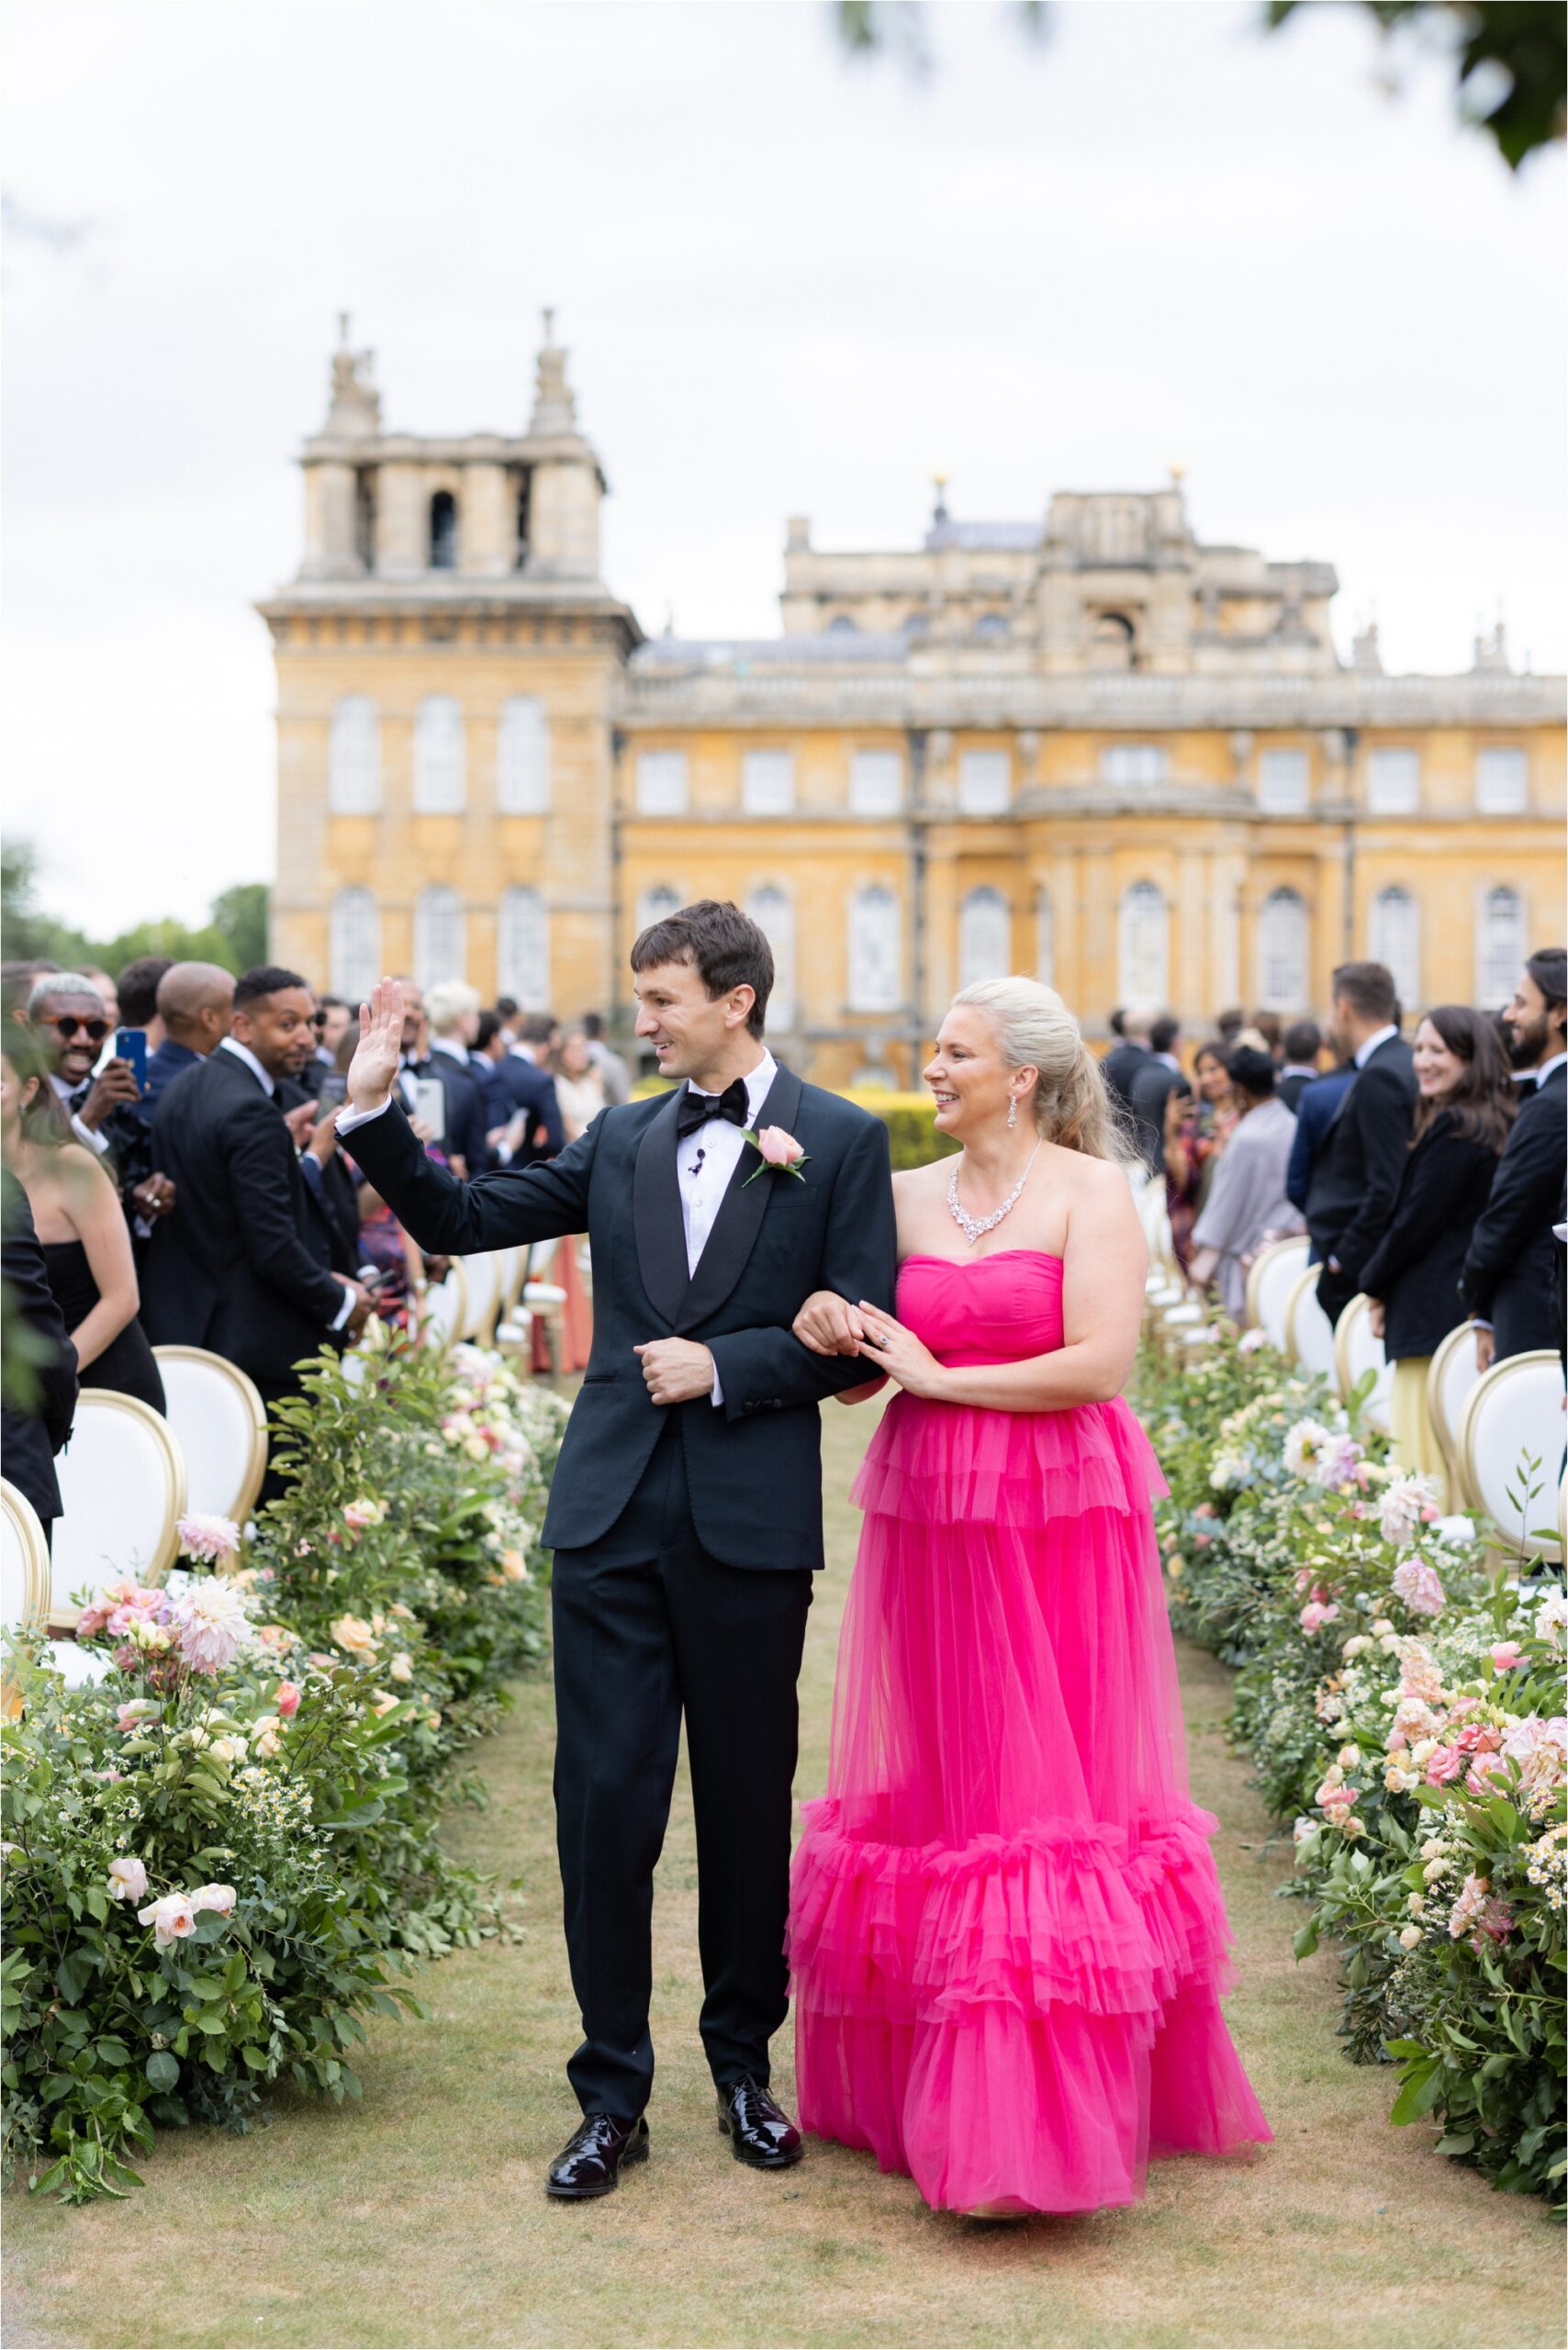 Outdoor wedding at Blenheim Palace